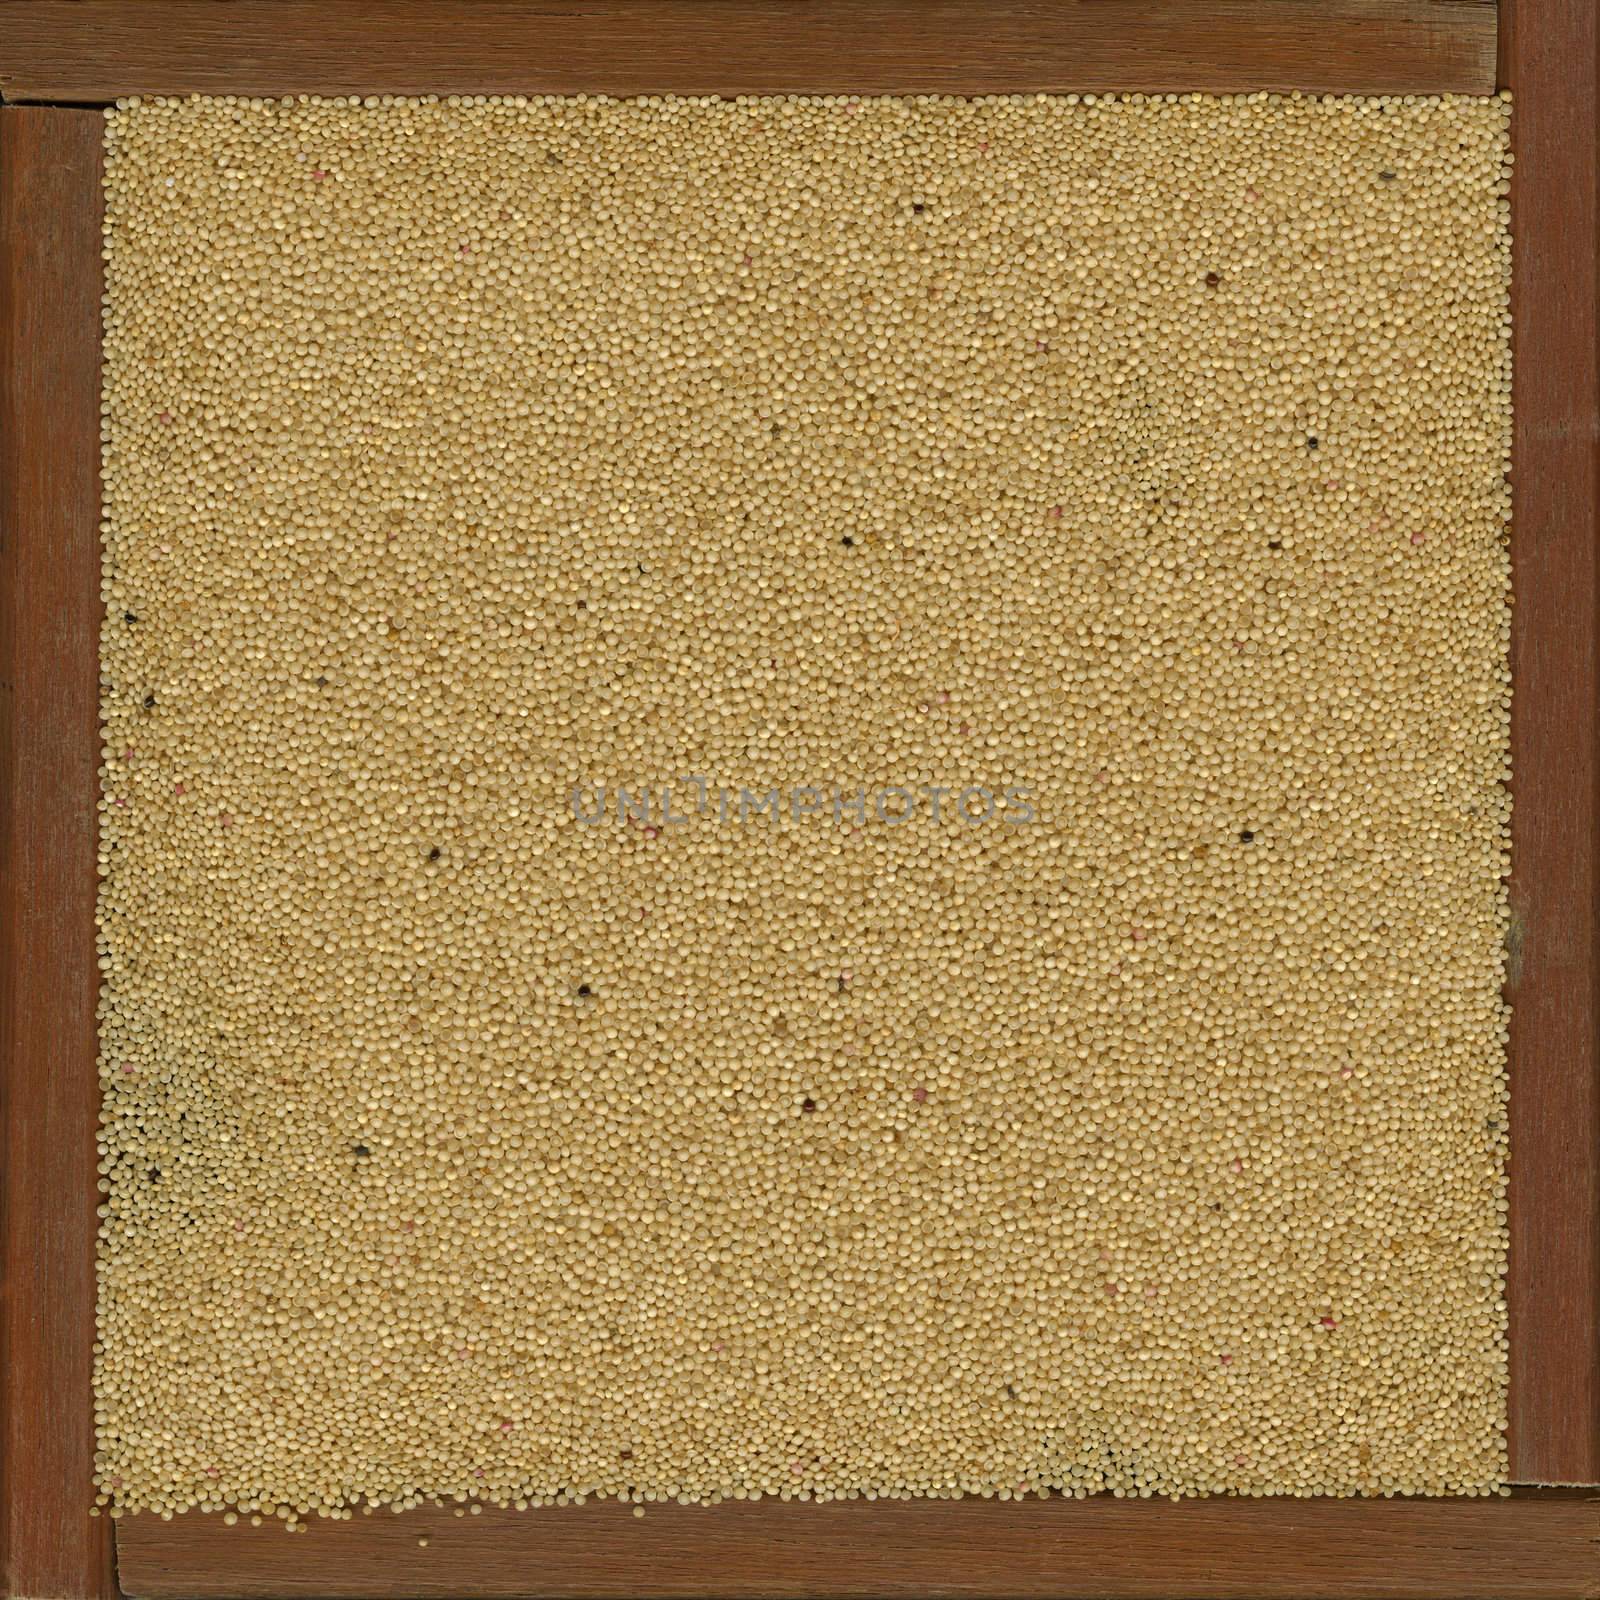 amaranth grain background by PixelsAway